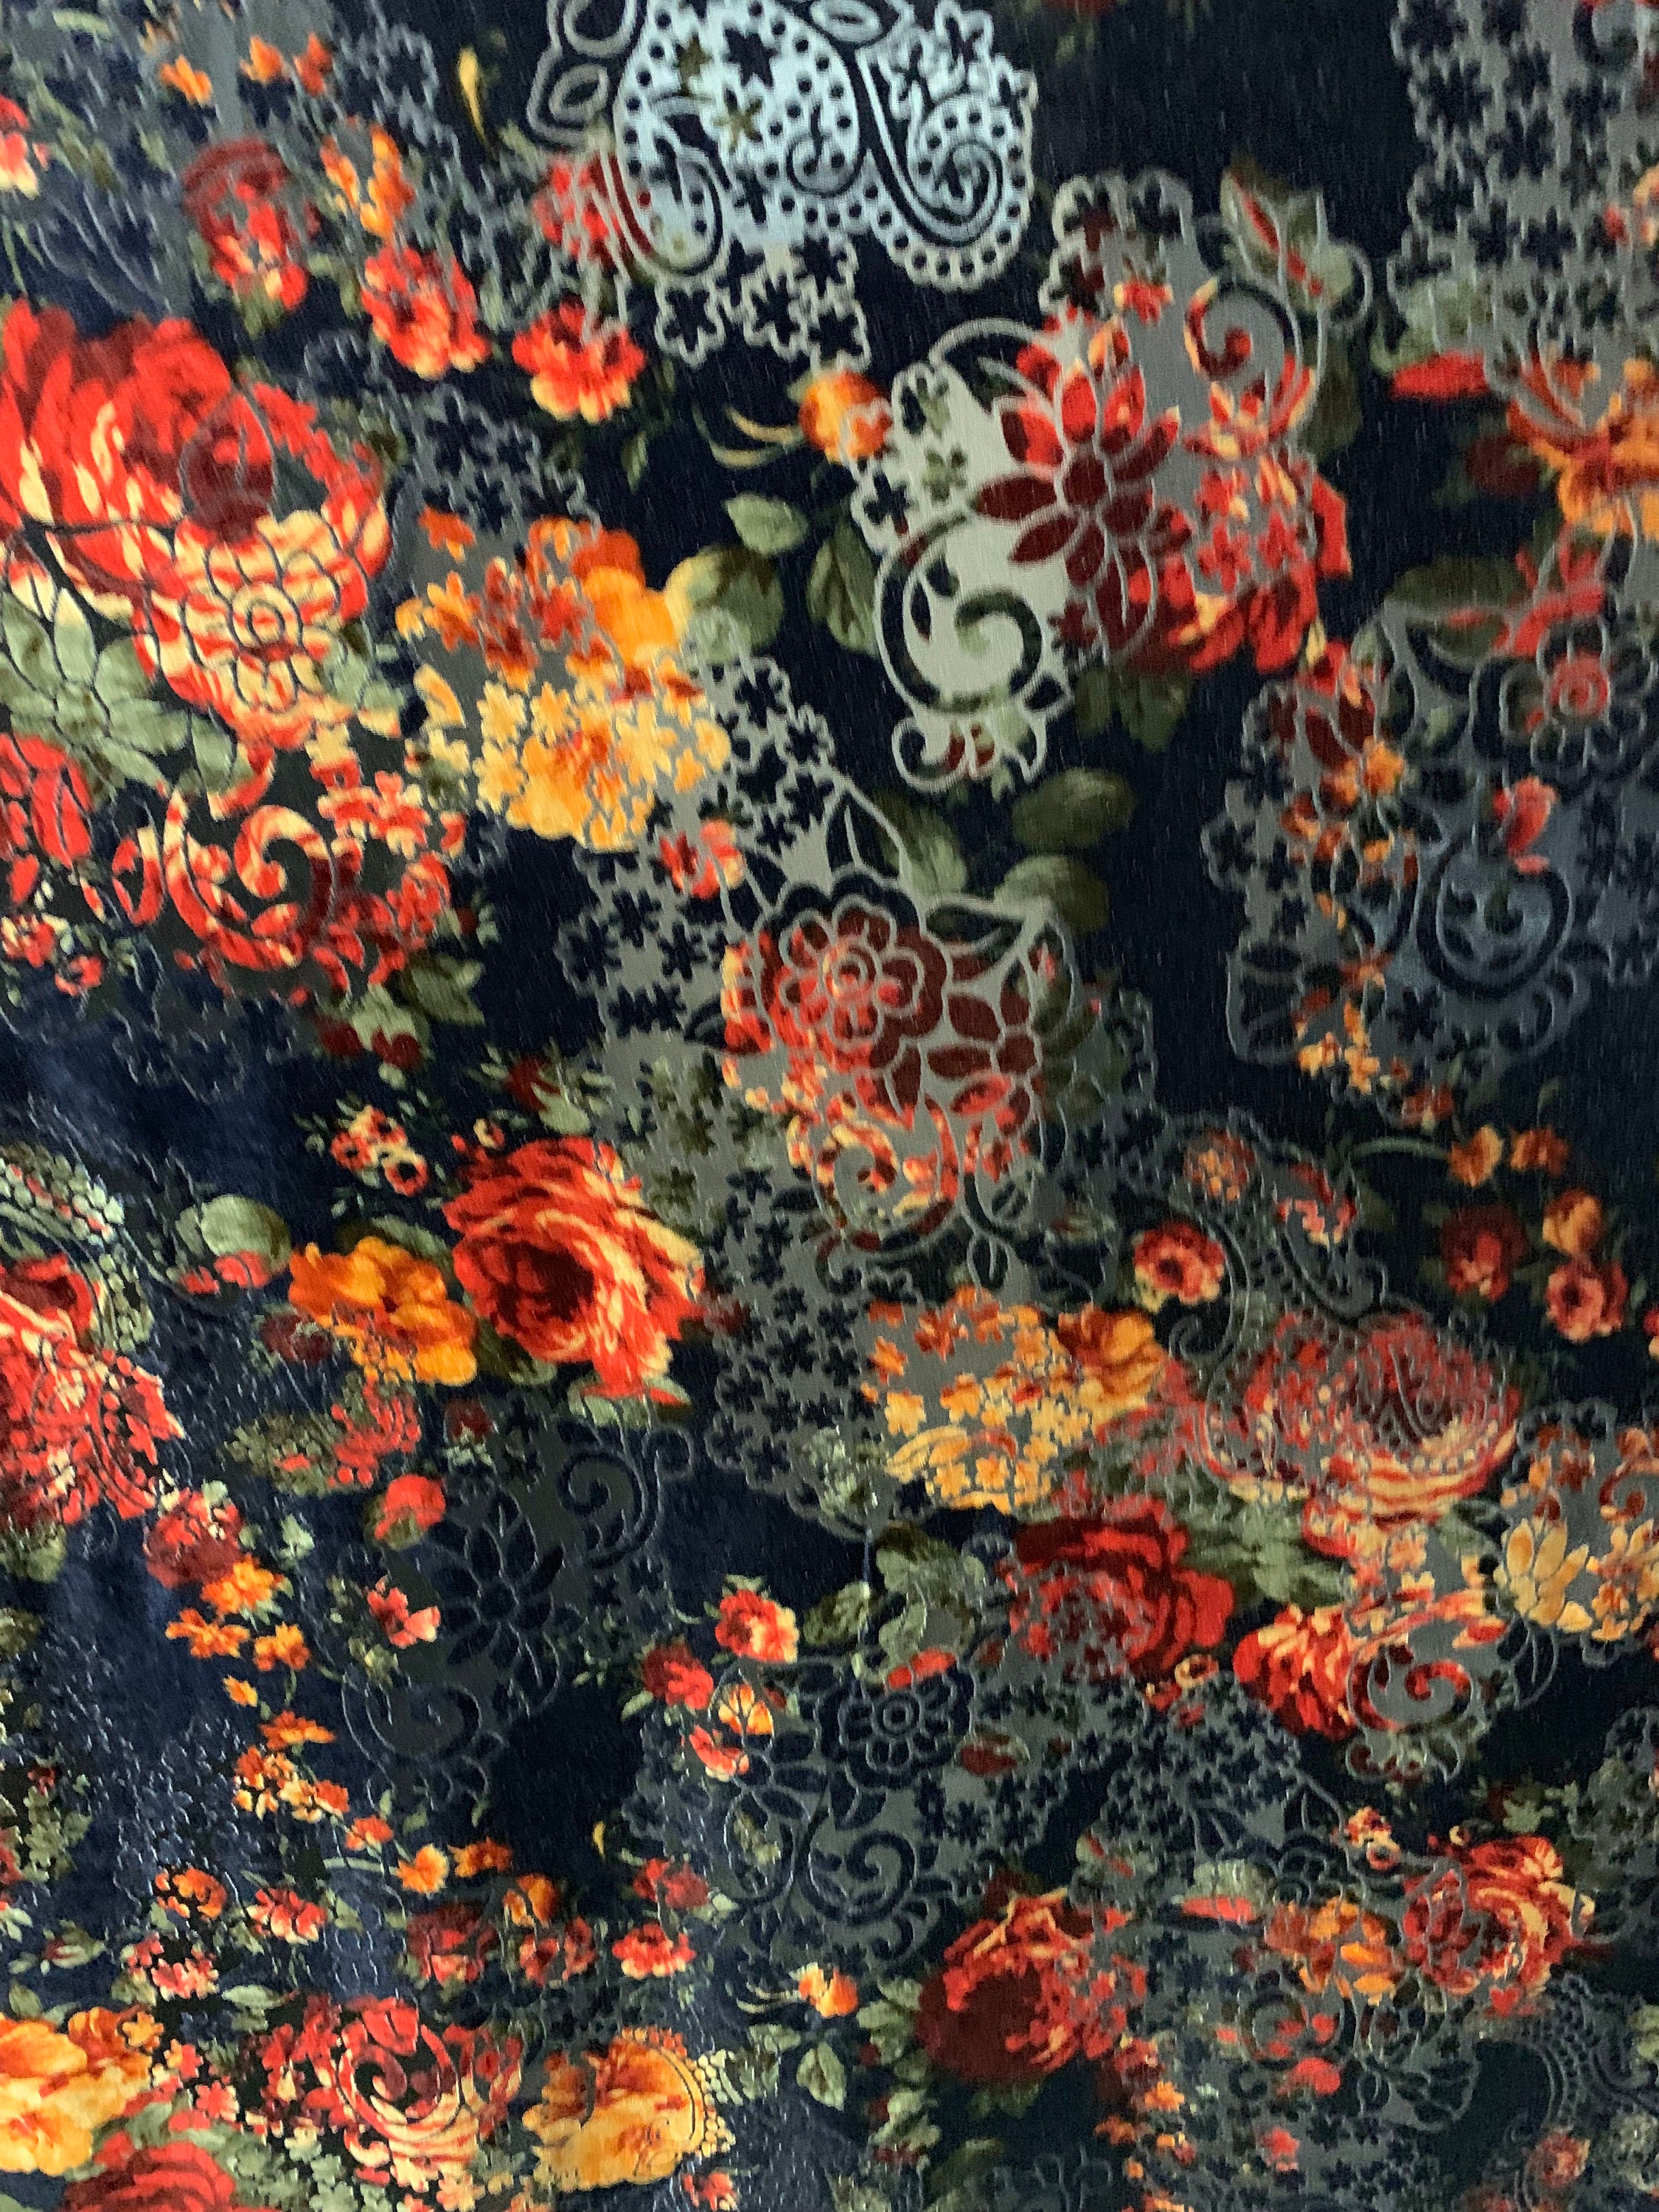 New burnout velvet exotic Flower design multicolor 4way | Etsy